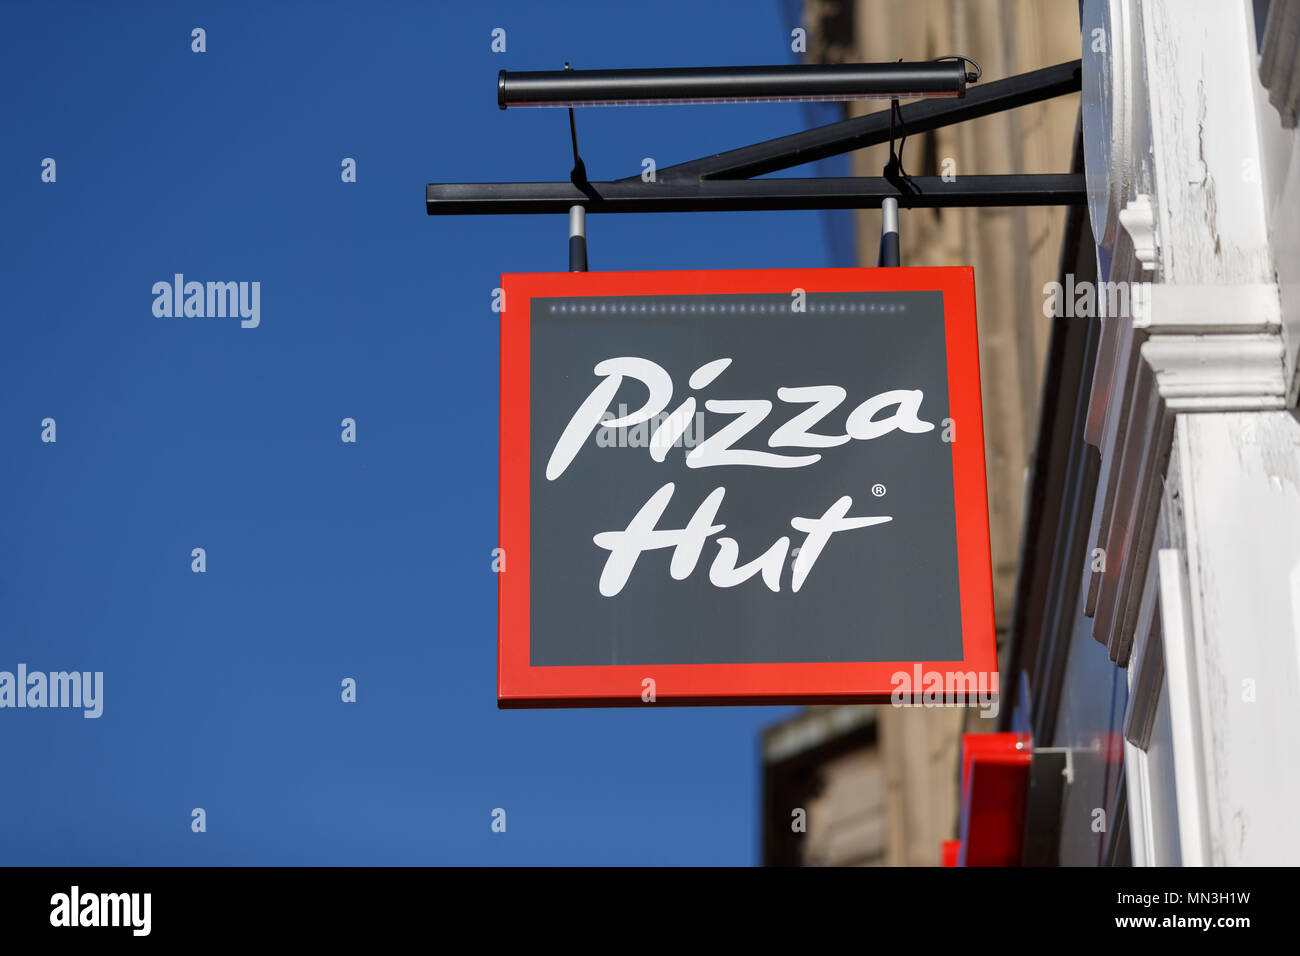 A high street branch of pizza restaurant chain Pizza Hut in the United Kingdom. / Pizza Hut logo, Pizza Hut sign. Stock Photo